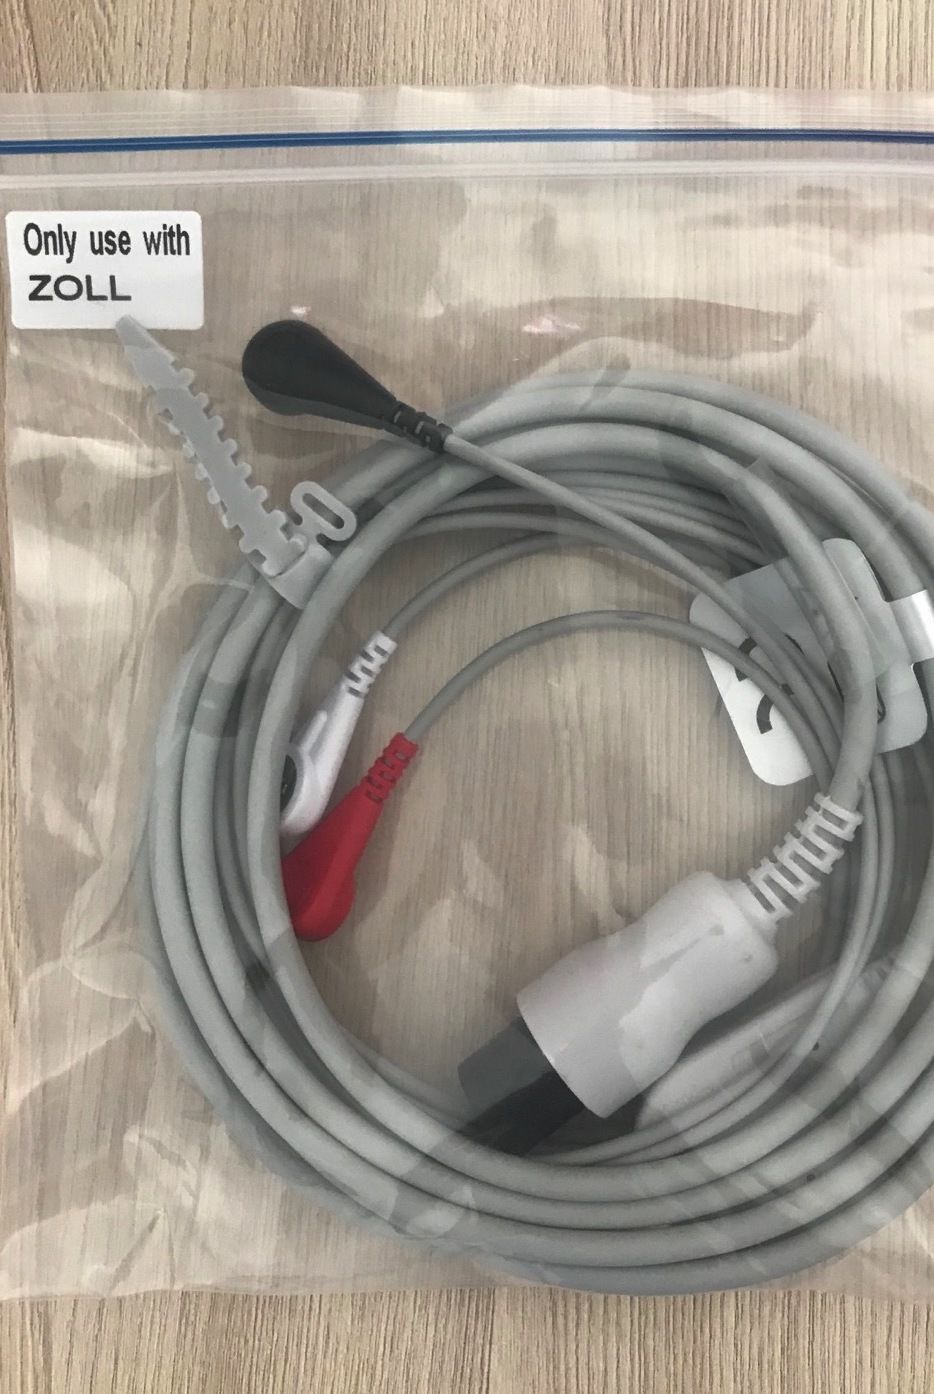 ECG Cable ECG Probe for Defibrillator Zoll_สายอีซีจีเคเบิ้ลสำหรับเครื่องกระตุกไฟฟ้าหัวใจดีฟิบรอลเลเตอร์ Zoll